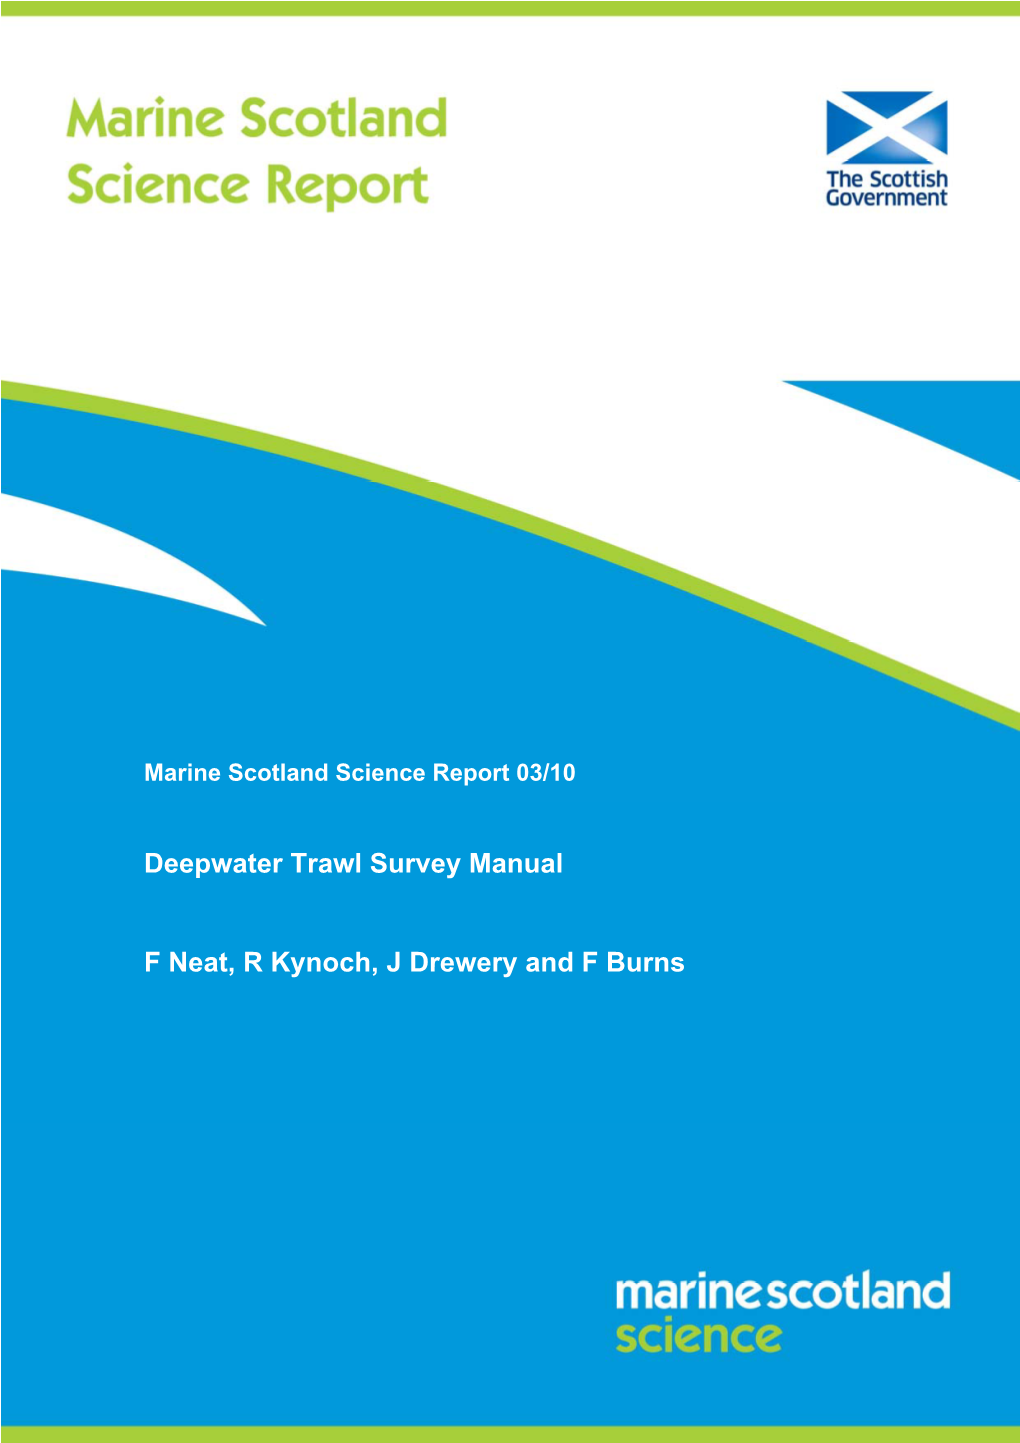 Marine Scotland Deepwater Trawl Survey Manual